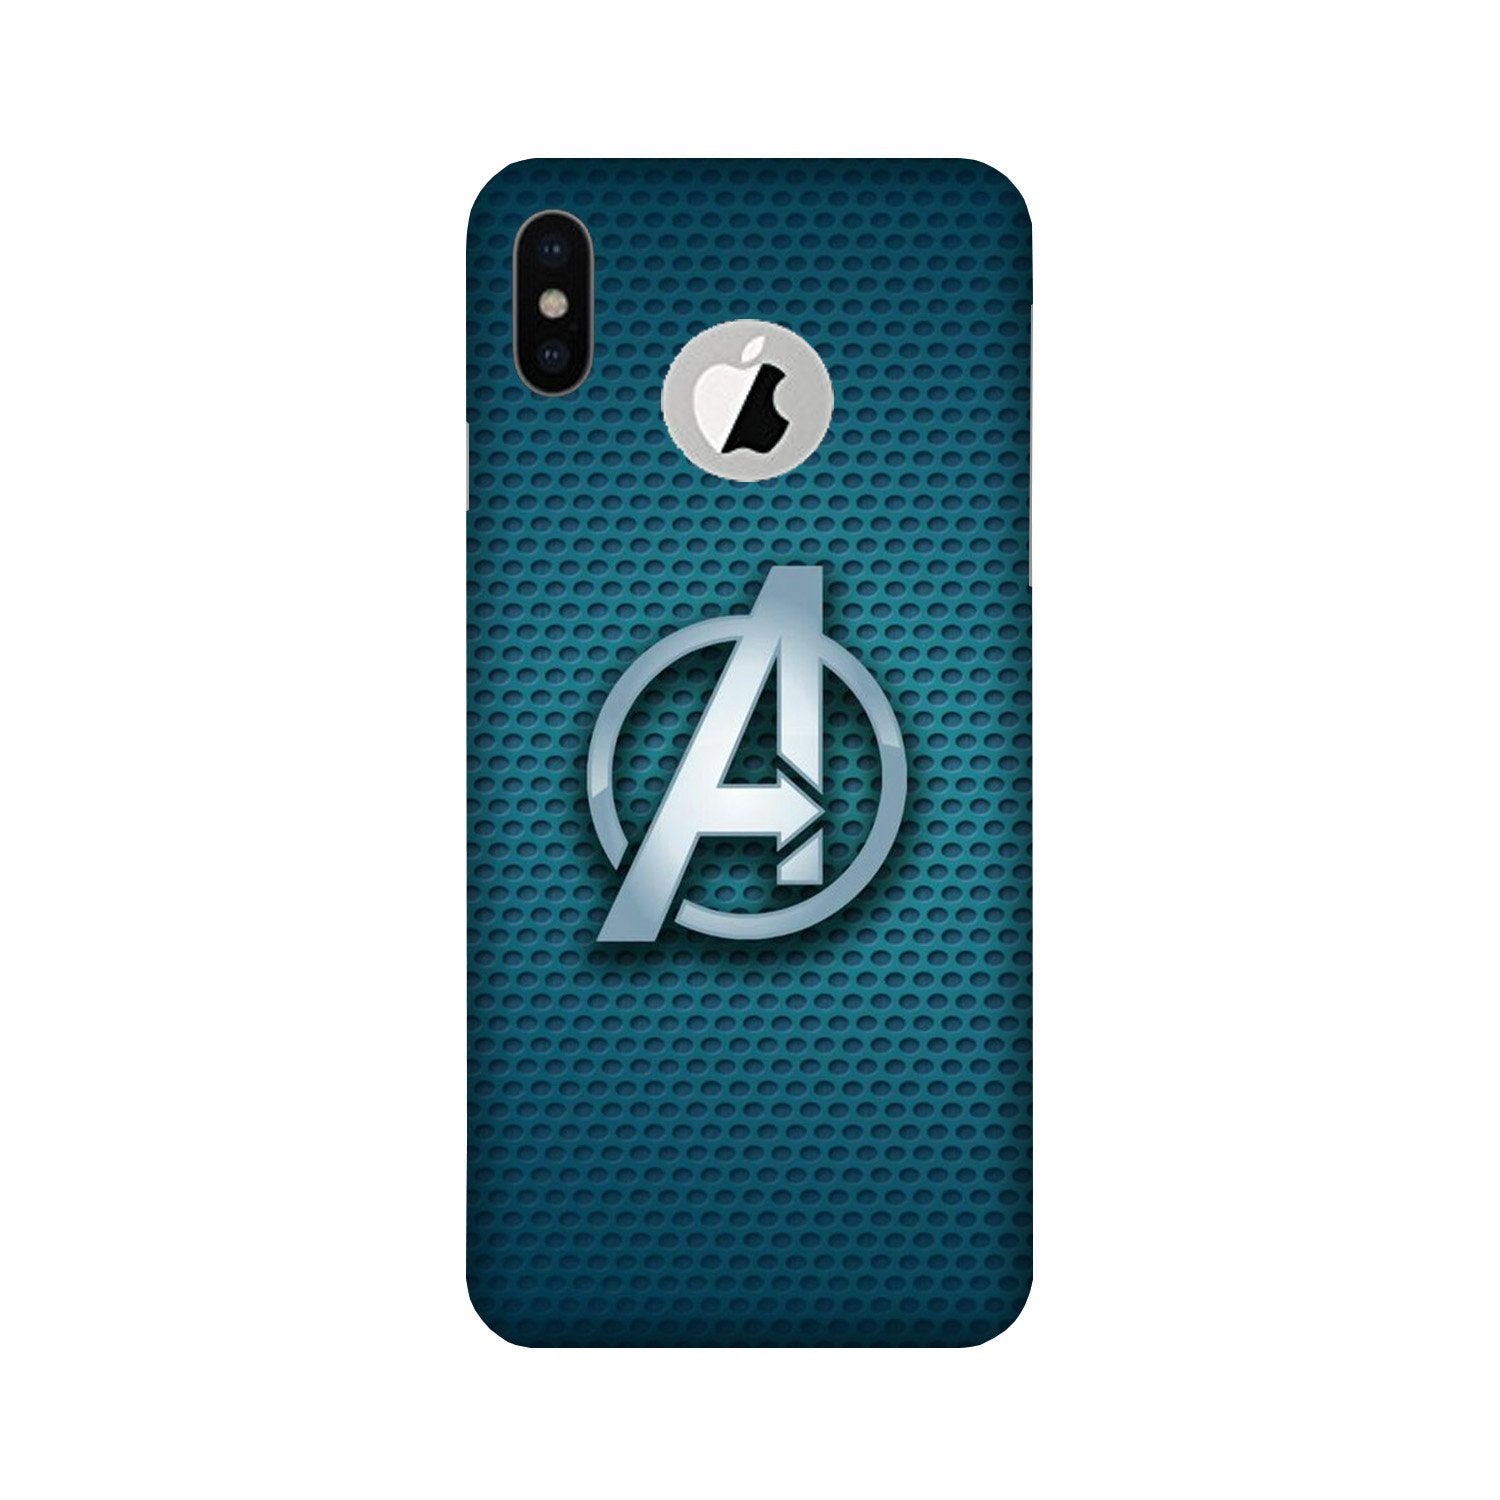 Avengers Case for iPhone X logo cut (Design No. 246)